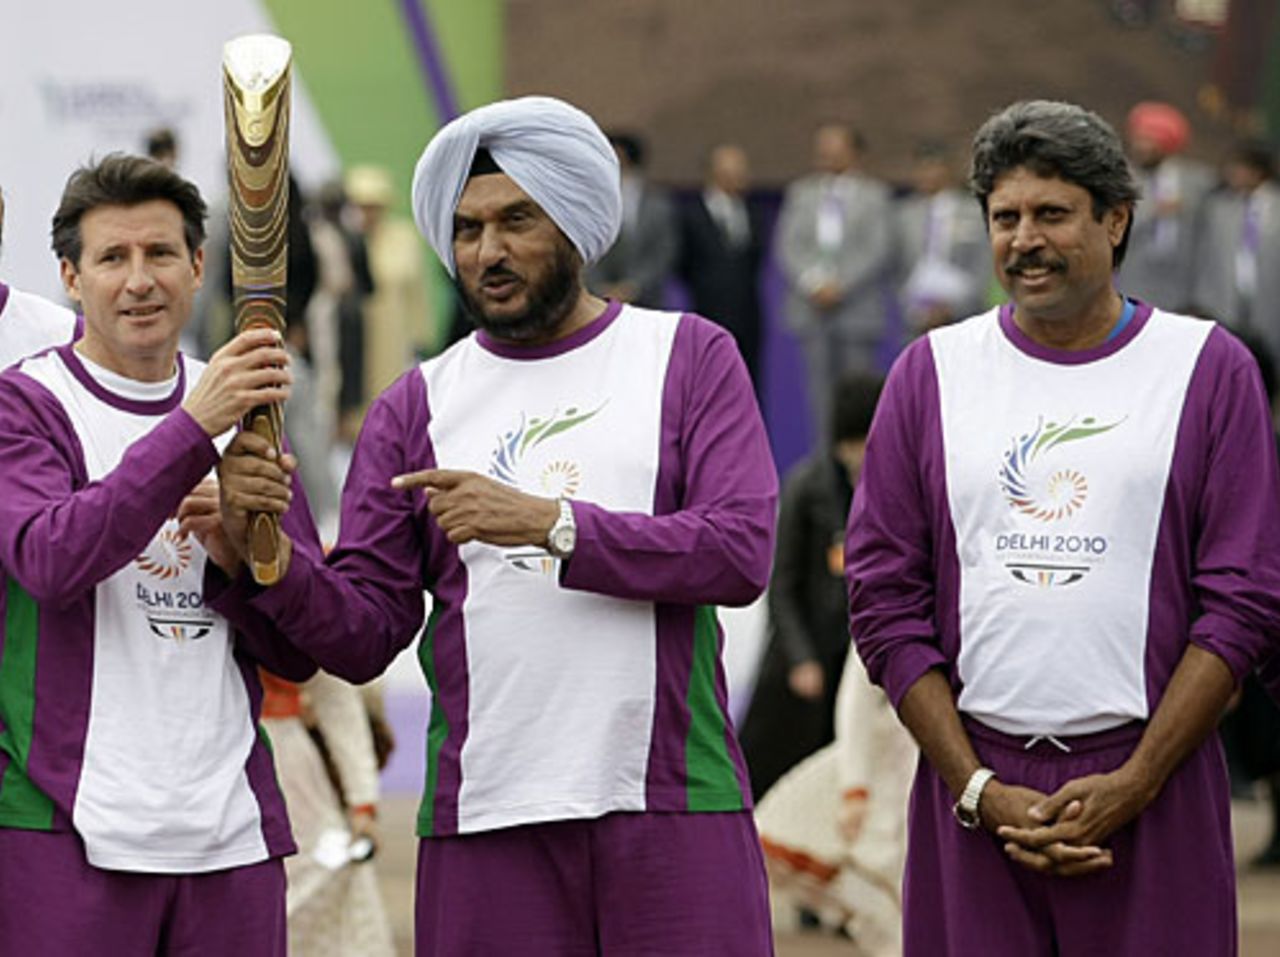 (From left) Sebastian Coe, Gurbachan Singh Randhawa and Kapil Dev at the the XIX Commonwealth Games Queen's Baton Relay, London, October 29, 2009